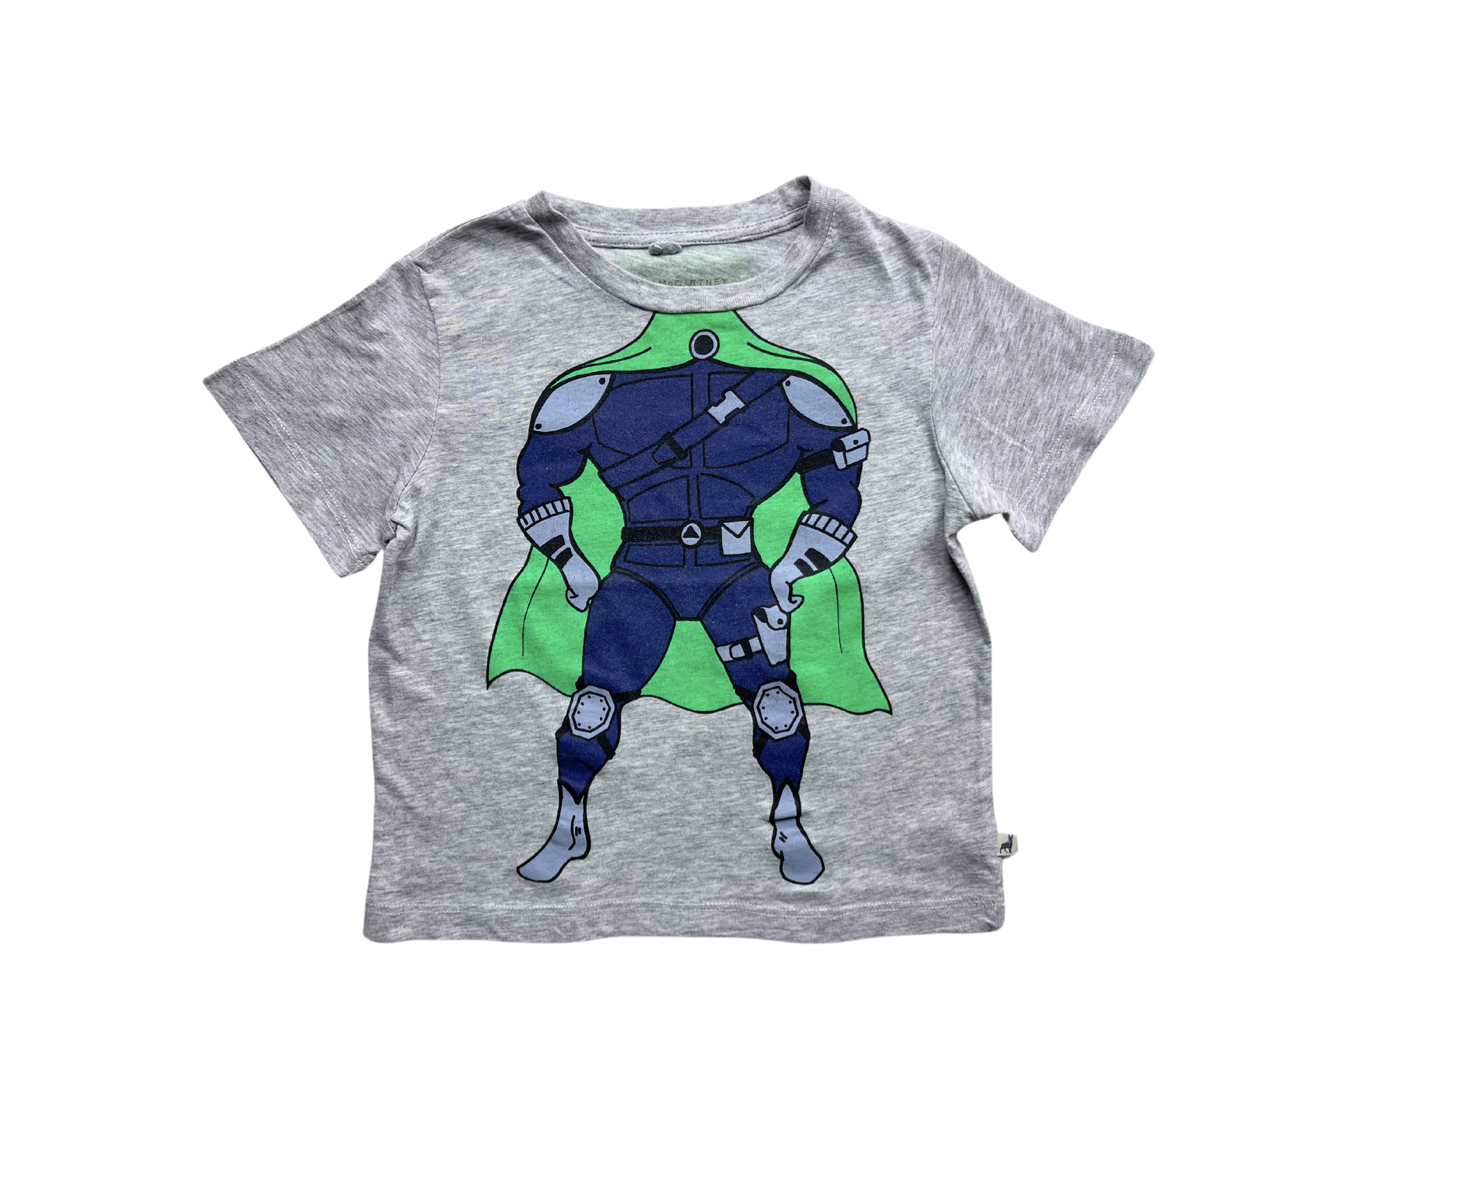 STELLA MCCARTNEY - T shirt gris corps de super hero - 3 ans